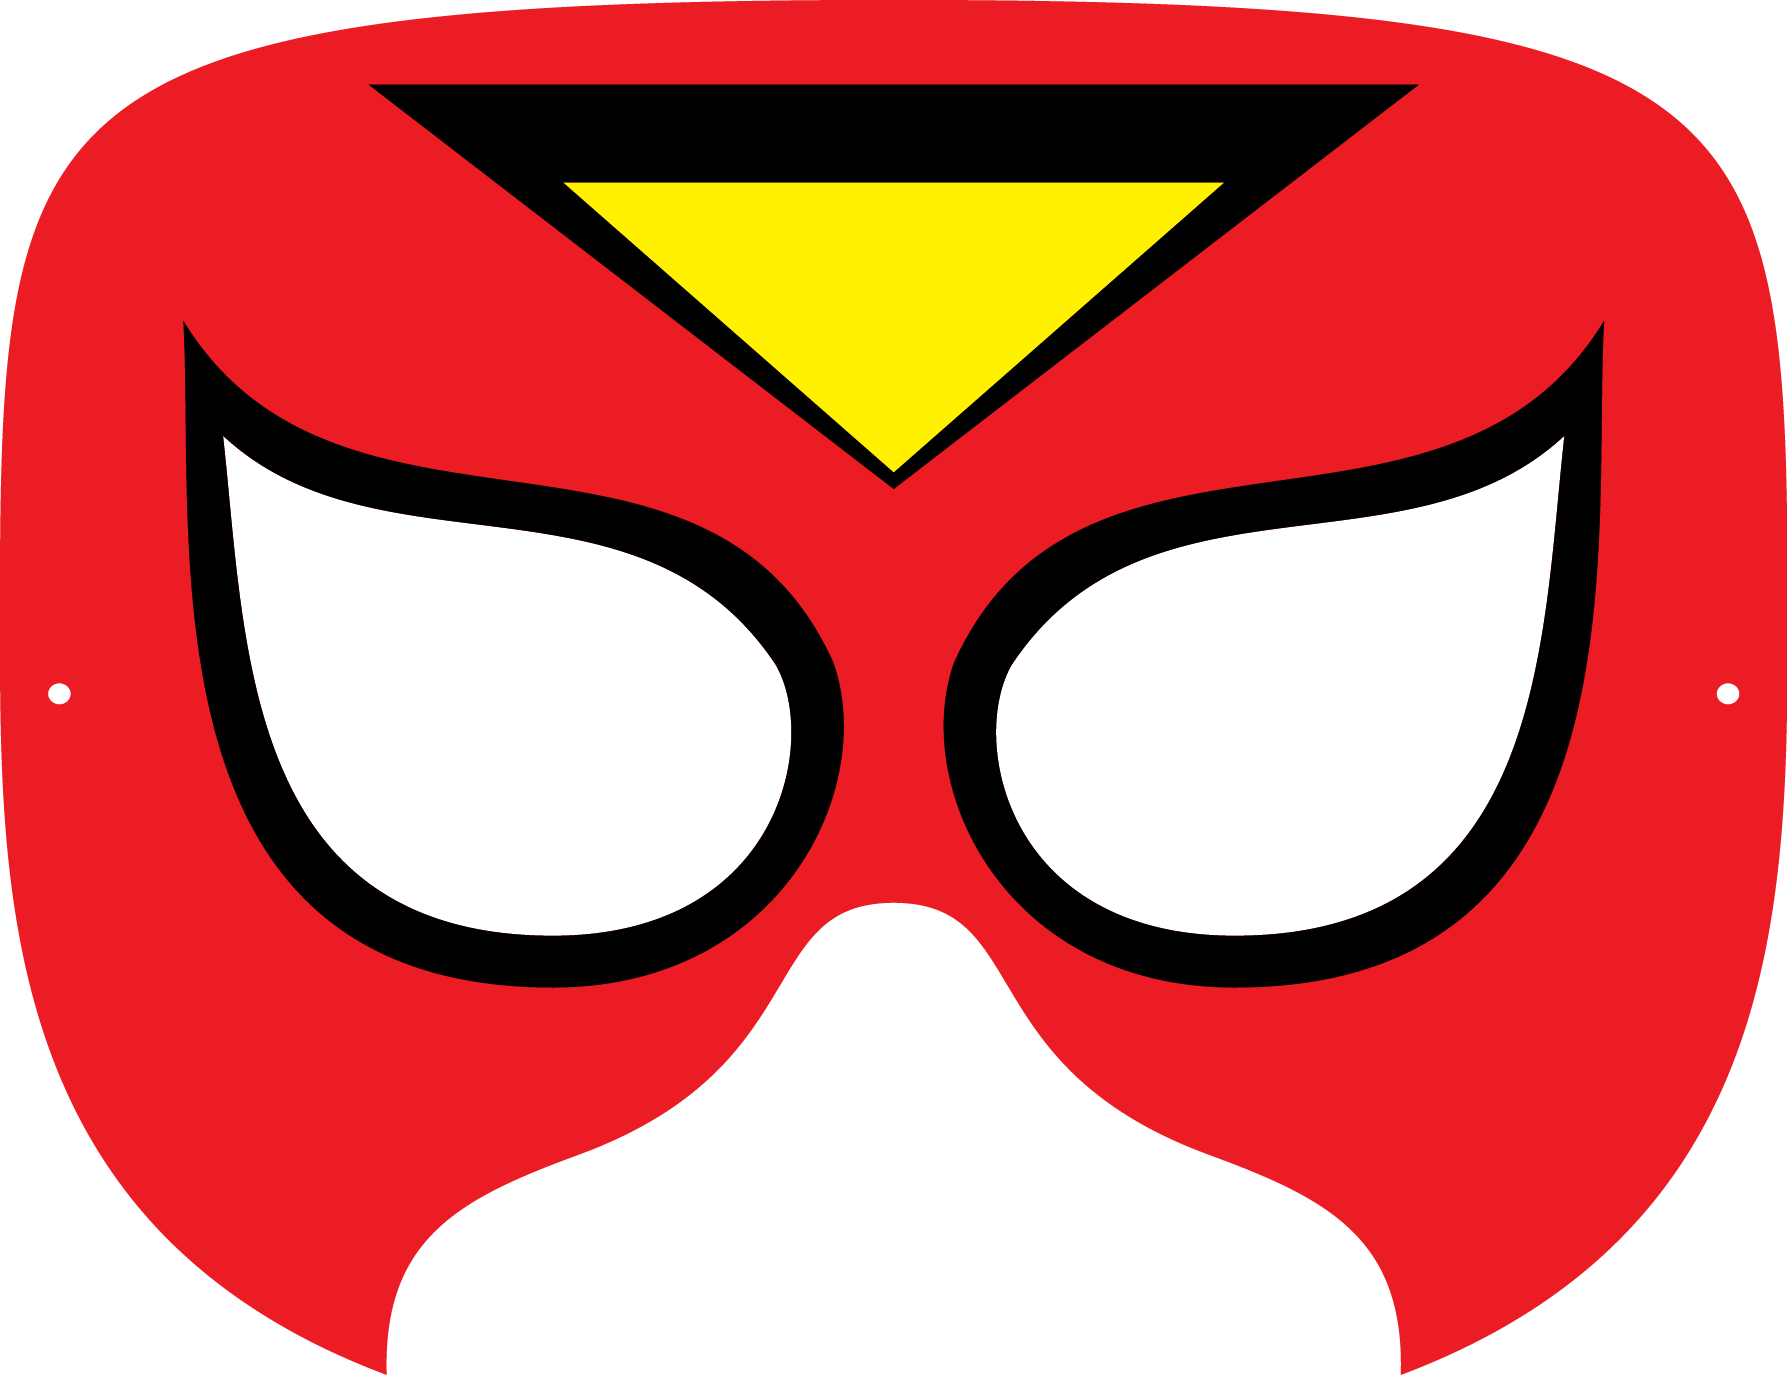 Halloween Mask Background PNG Image